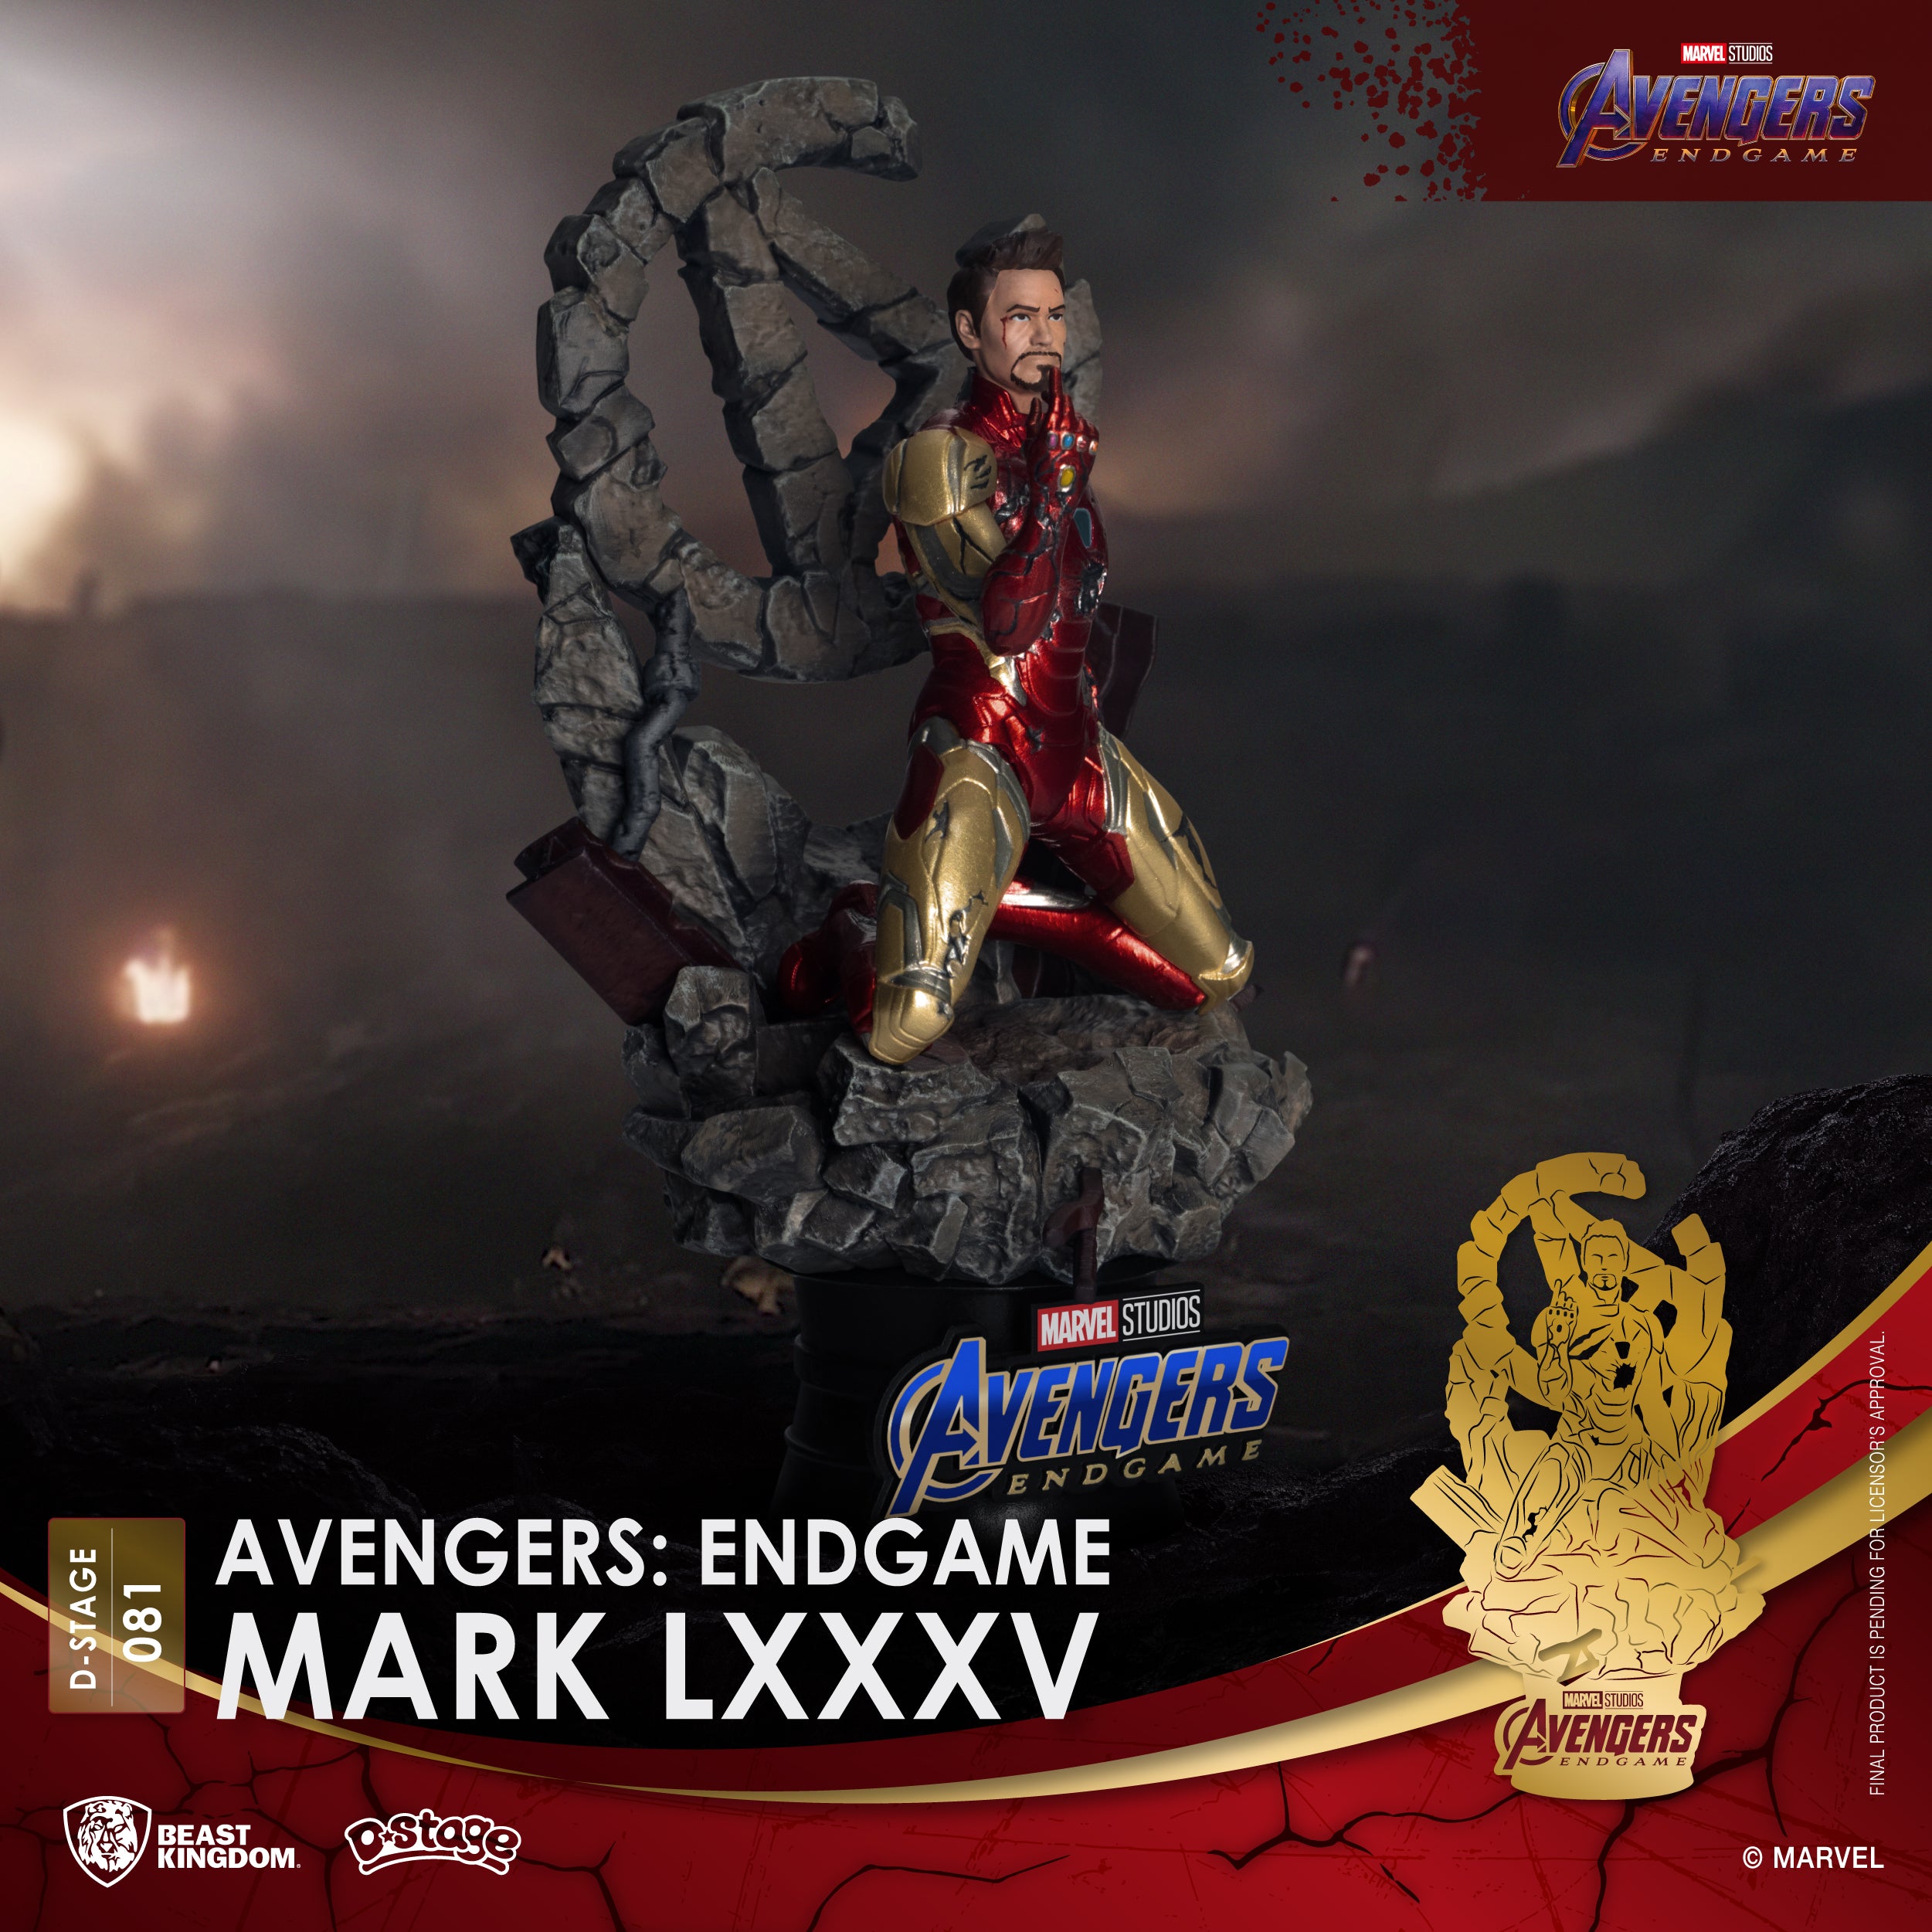 Beast Kingdom DS-081 Marvel Avengers Endgame: Iron Man MK85 Mark LXXXV Diorama Stage D-Stage Figure Statue